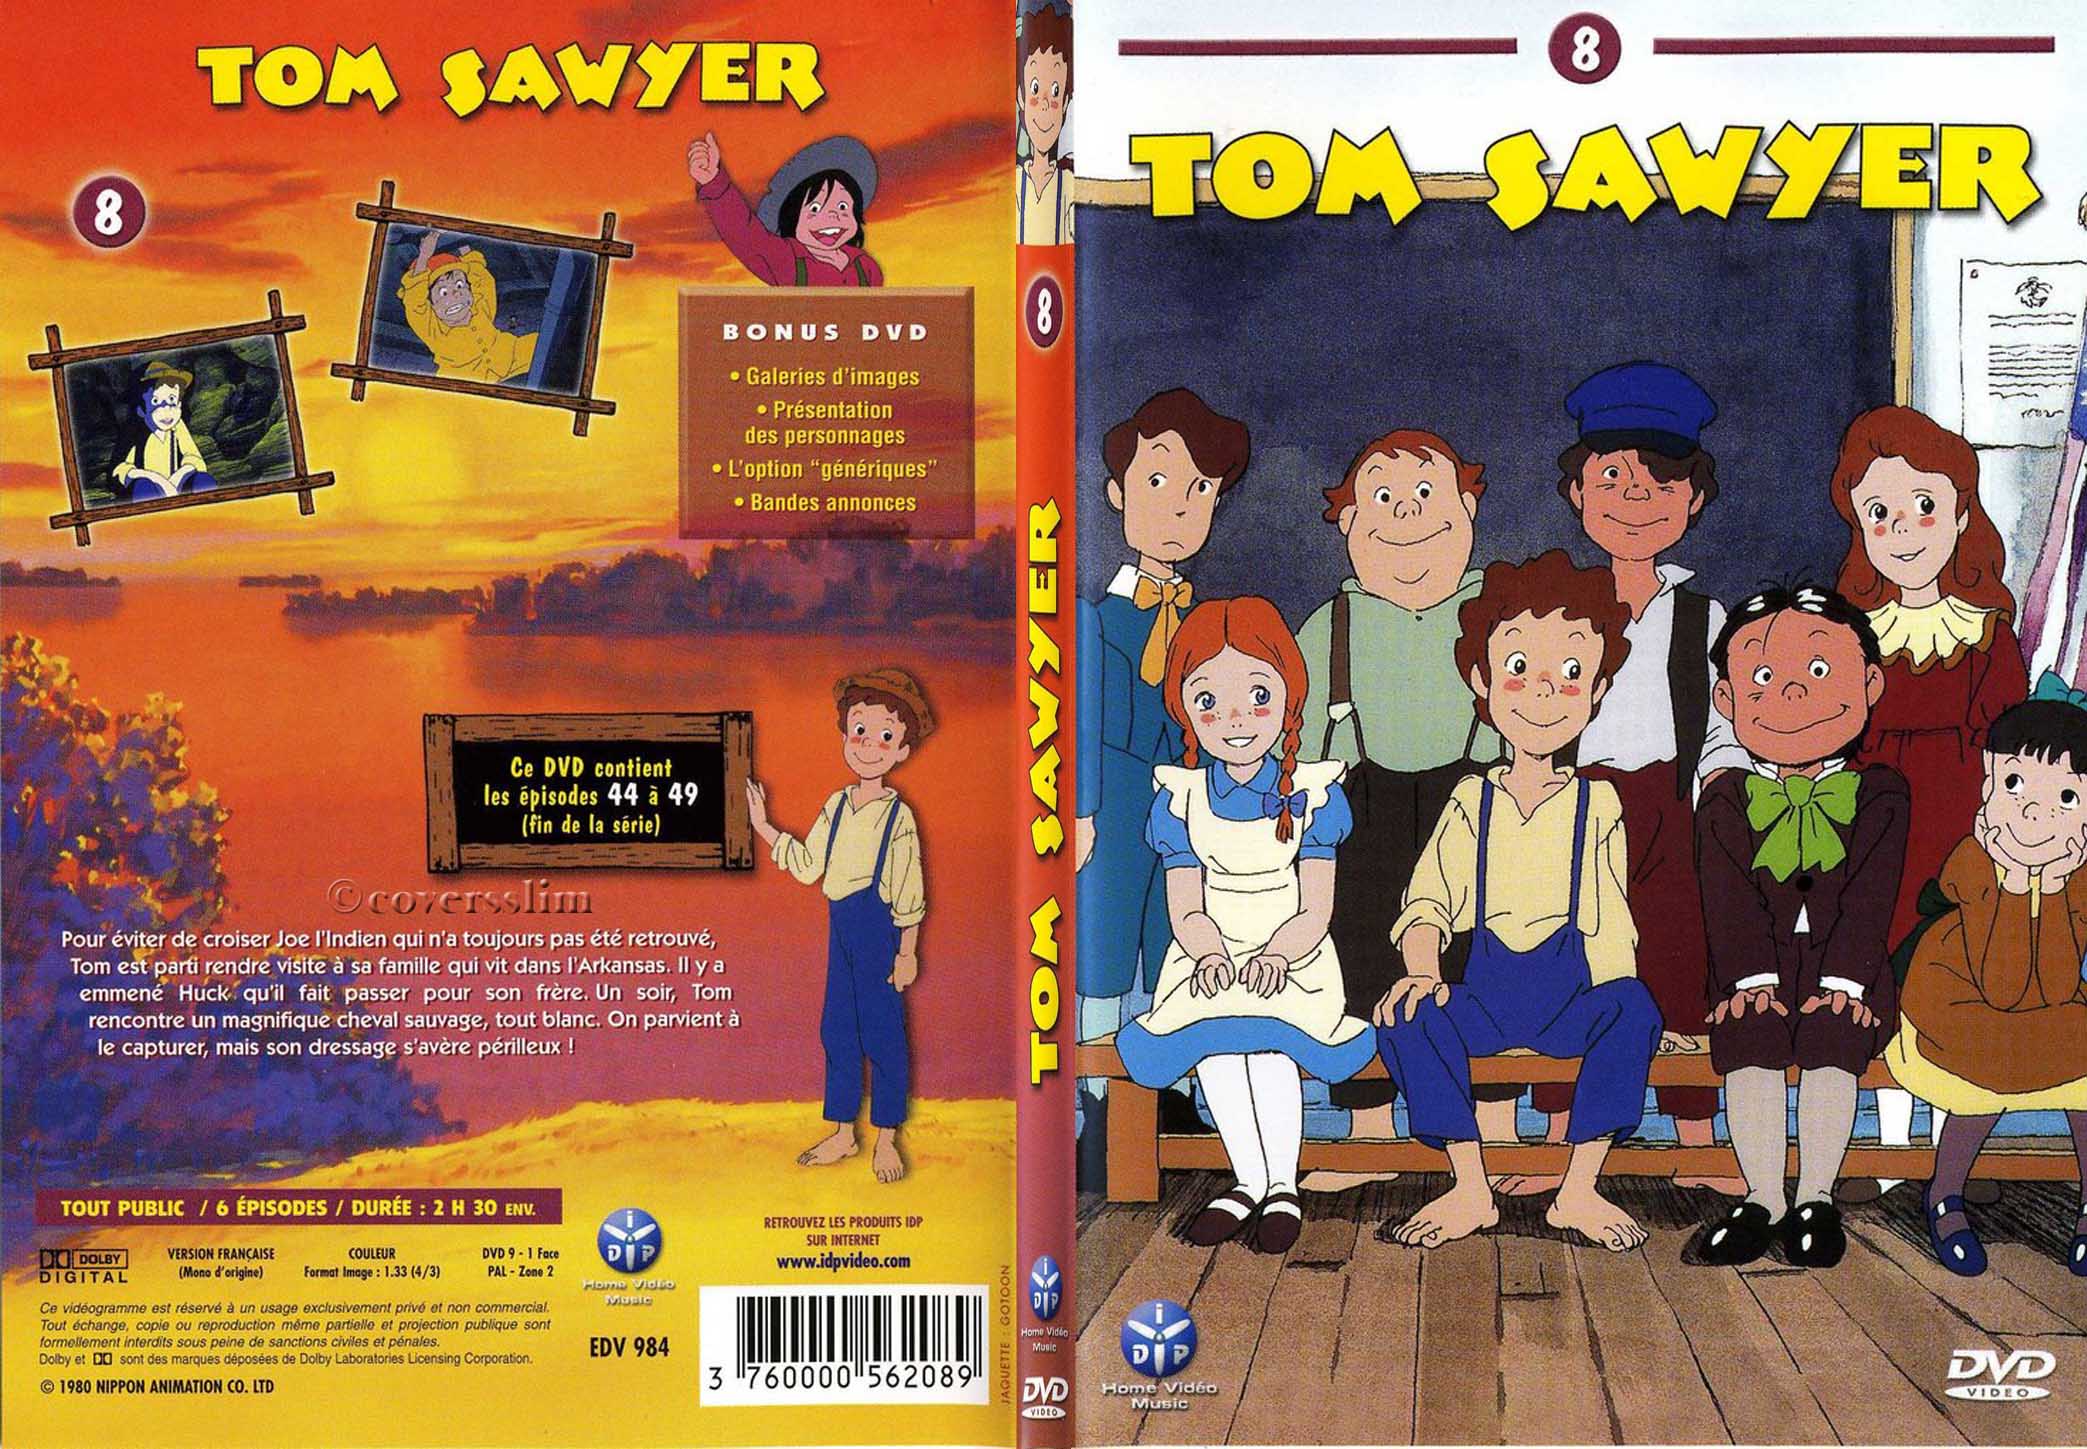 Jaquette DVD Tom Sawyer vol 8 - SLIM v2